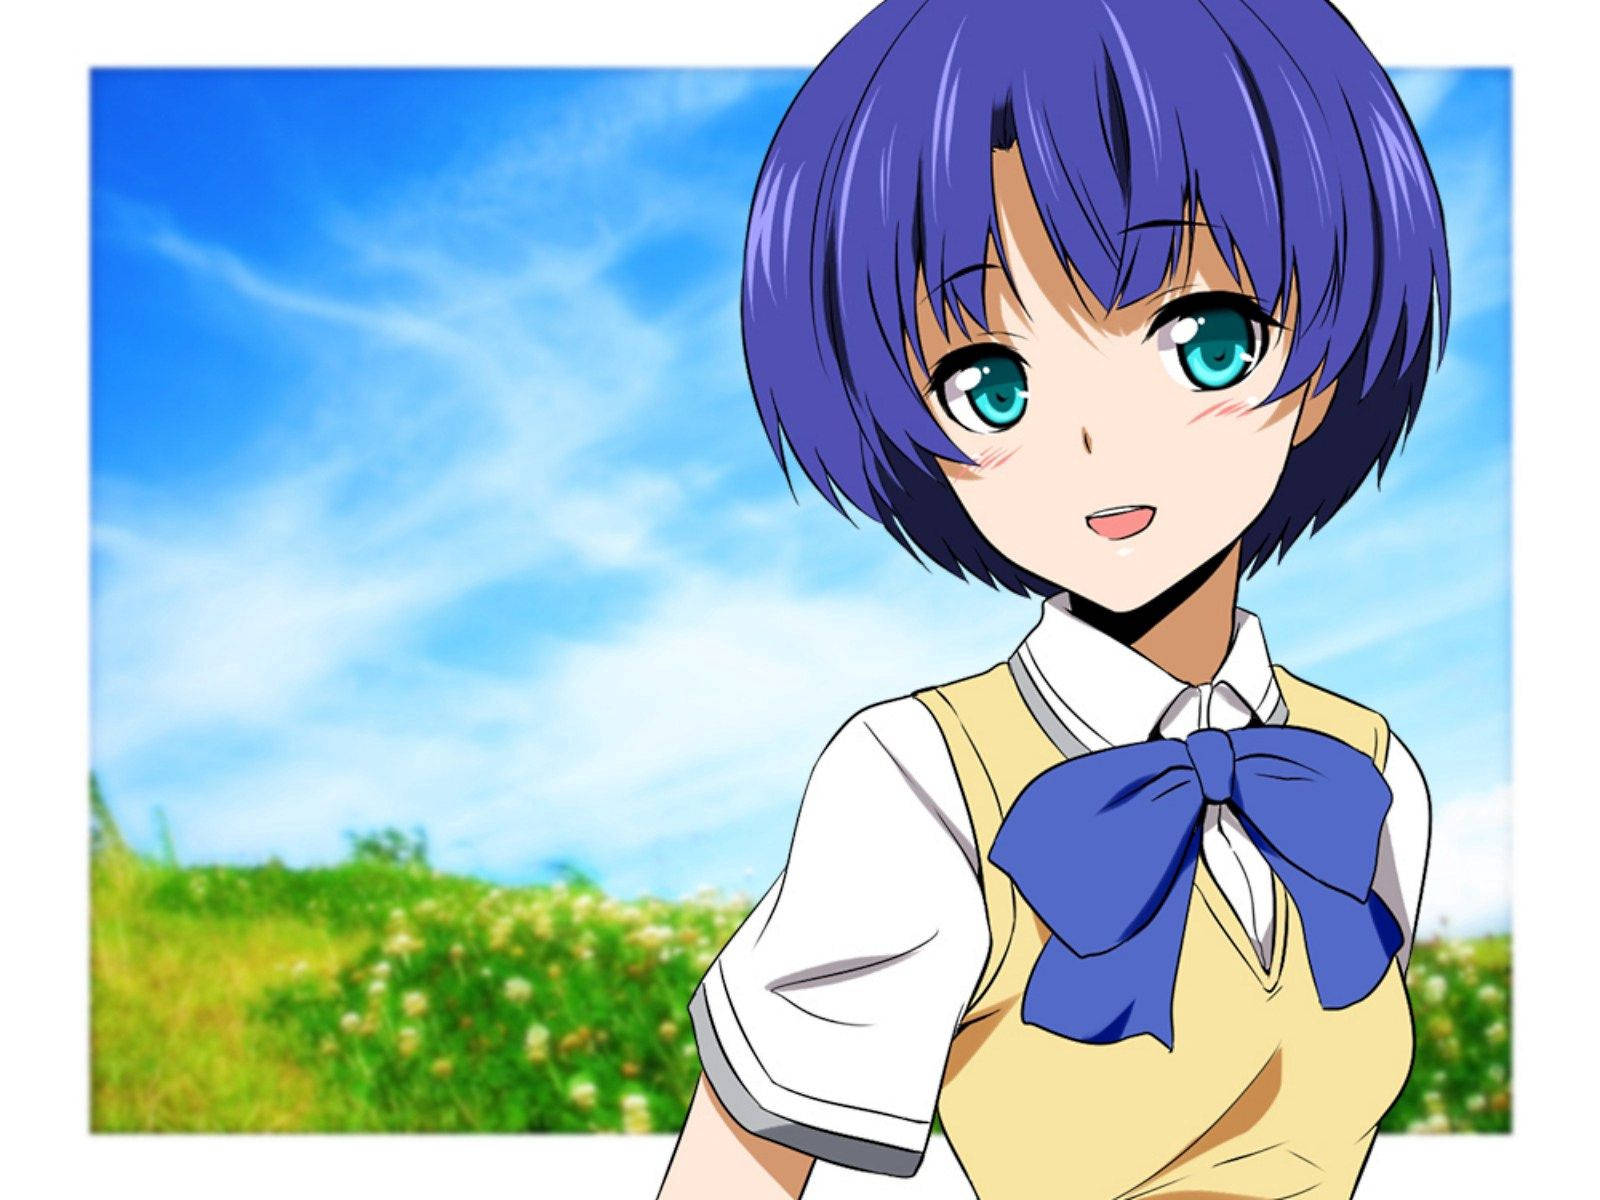 Cute Anime Girl In The Field